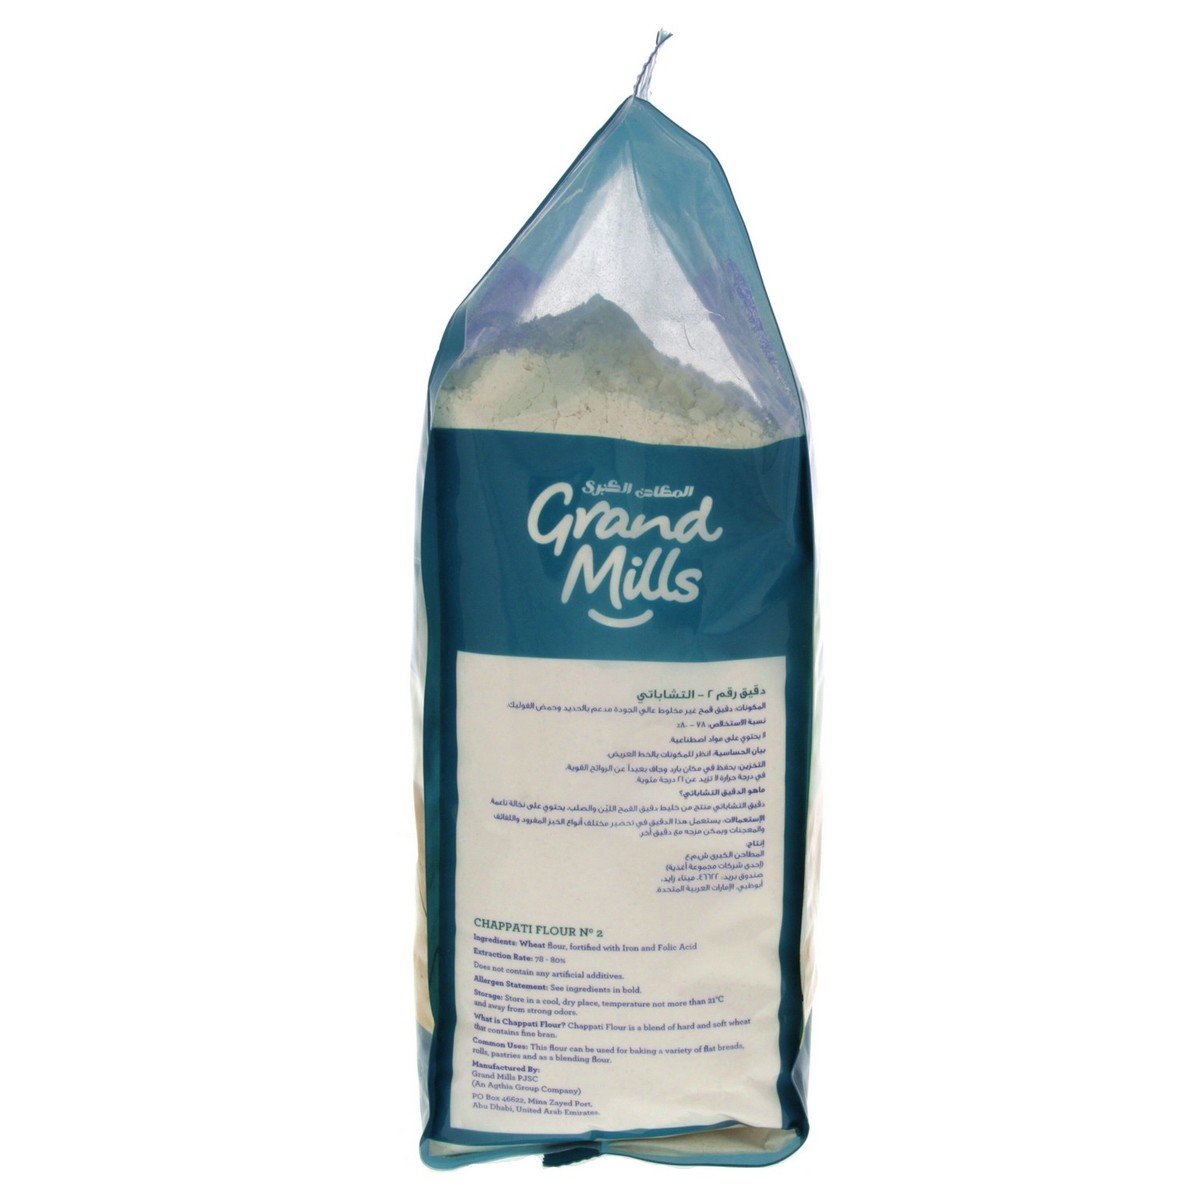 Grand Mills Chappathi Flour (Flour No:2) 2 kg